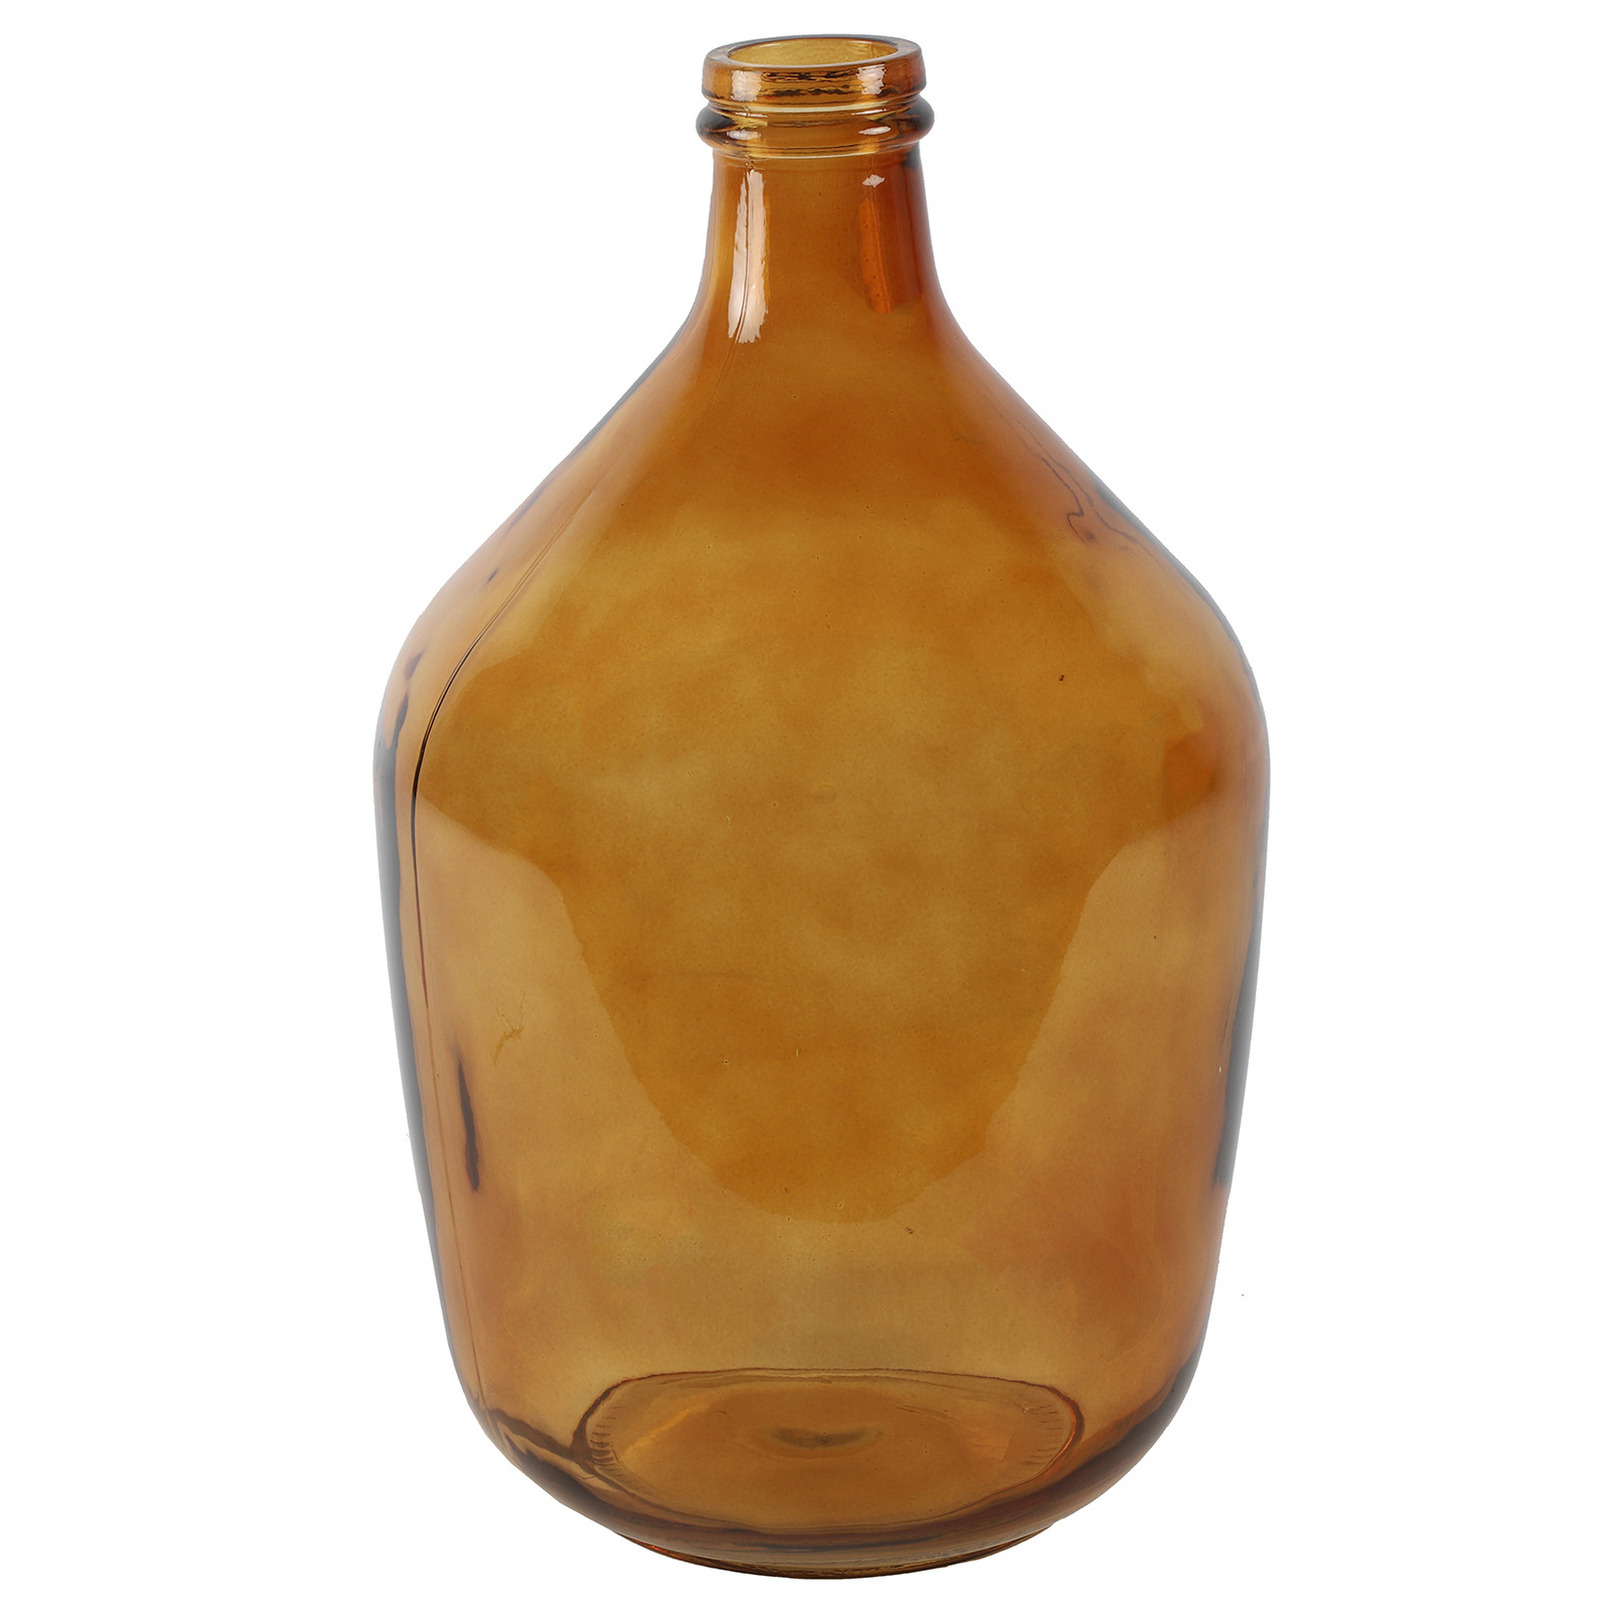 Countryfield vaas amber goud-geel transparant glas XL fles D23 x H38 cm